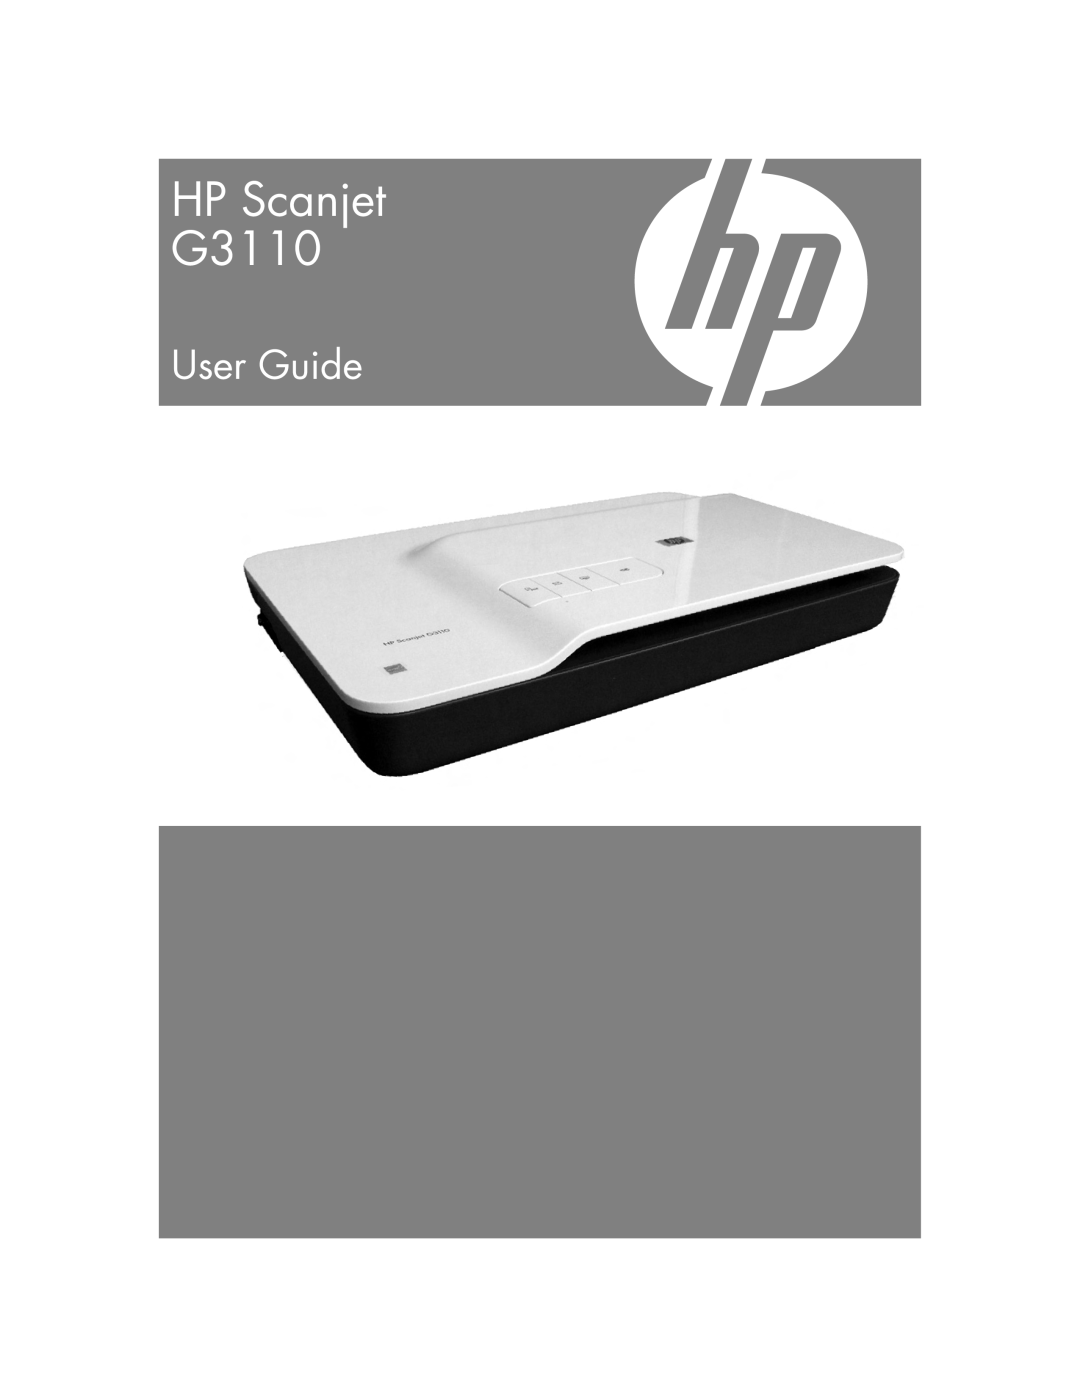 HP G3110 L2698A manual HP Scanjet G3110, User Guide 